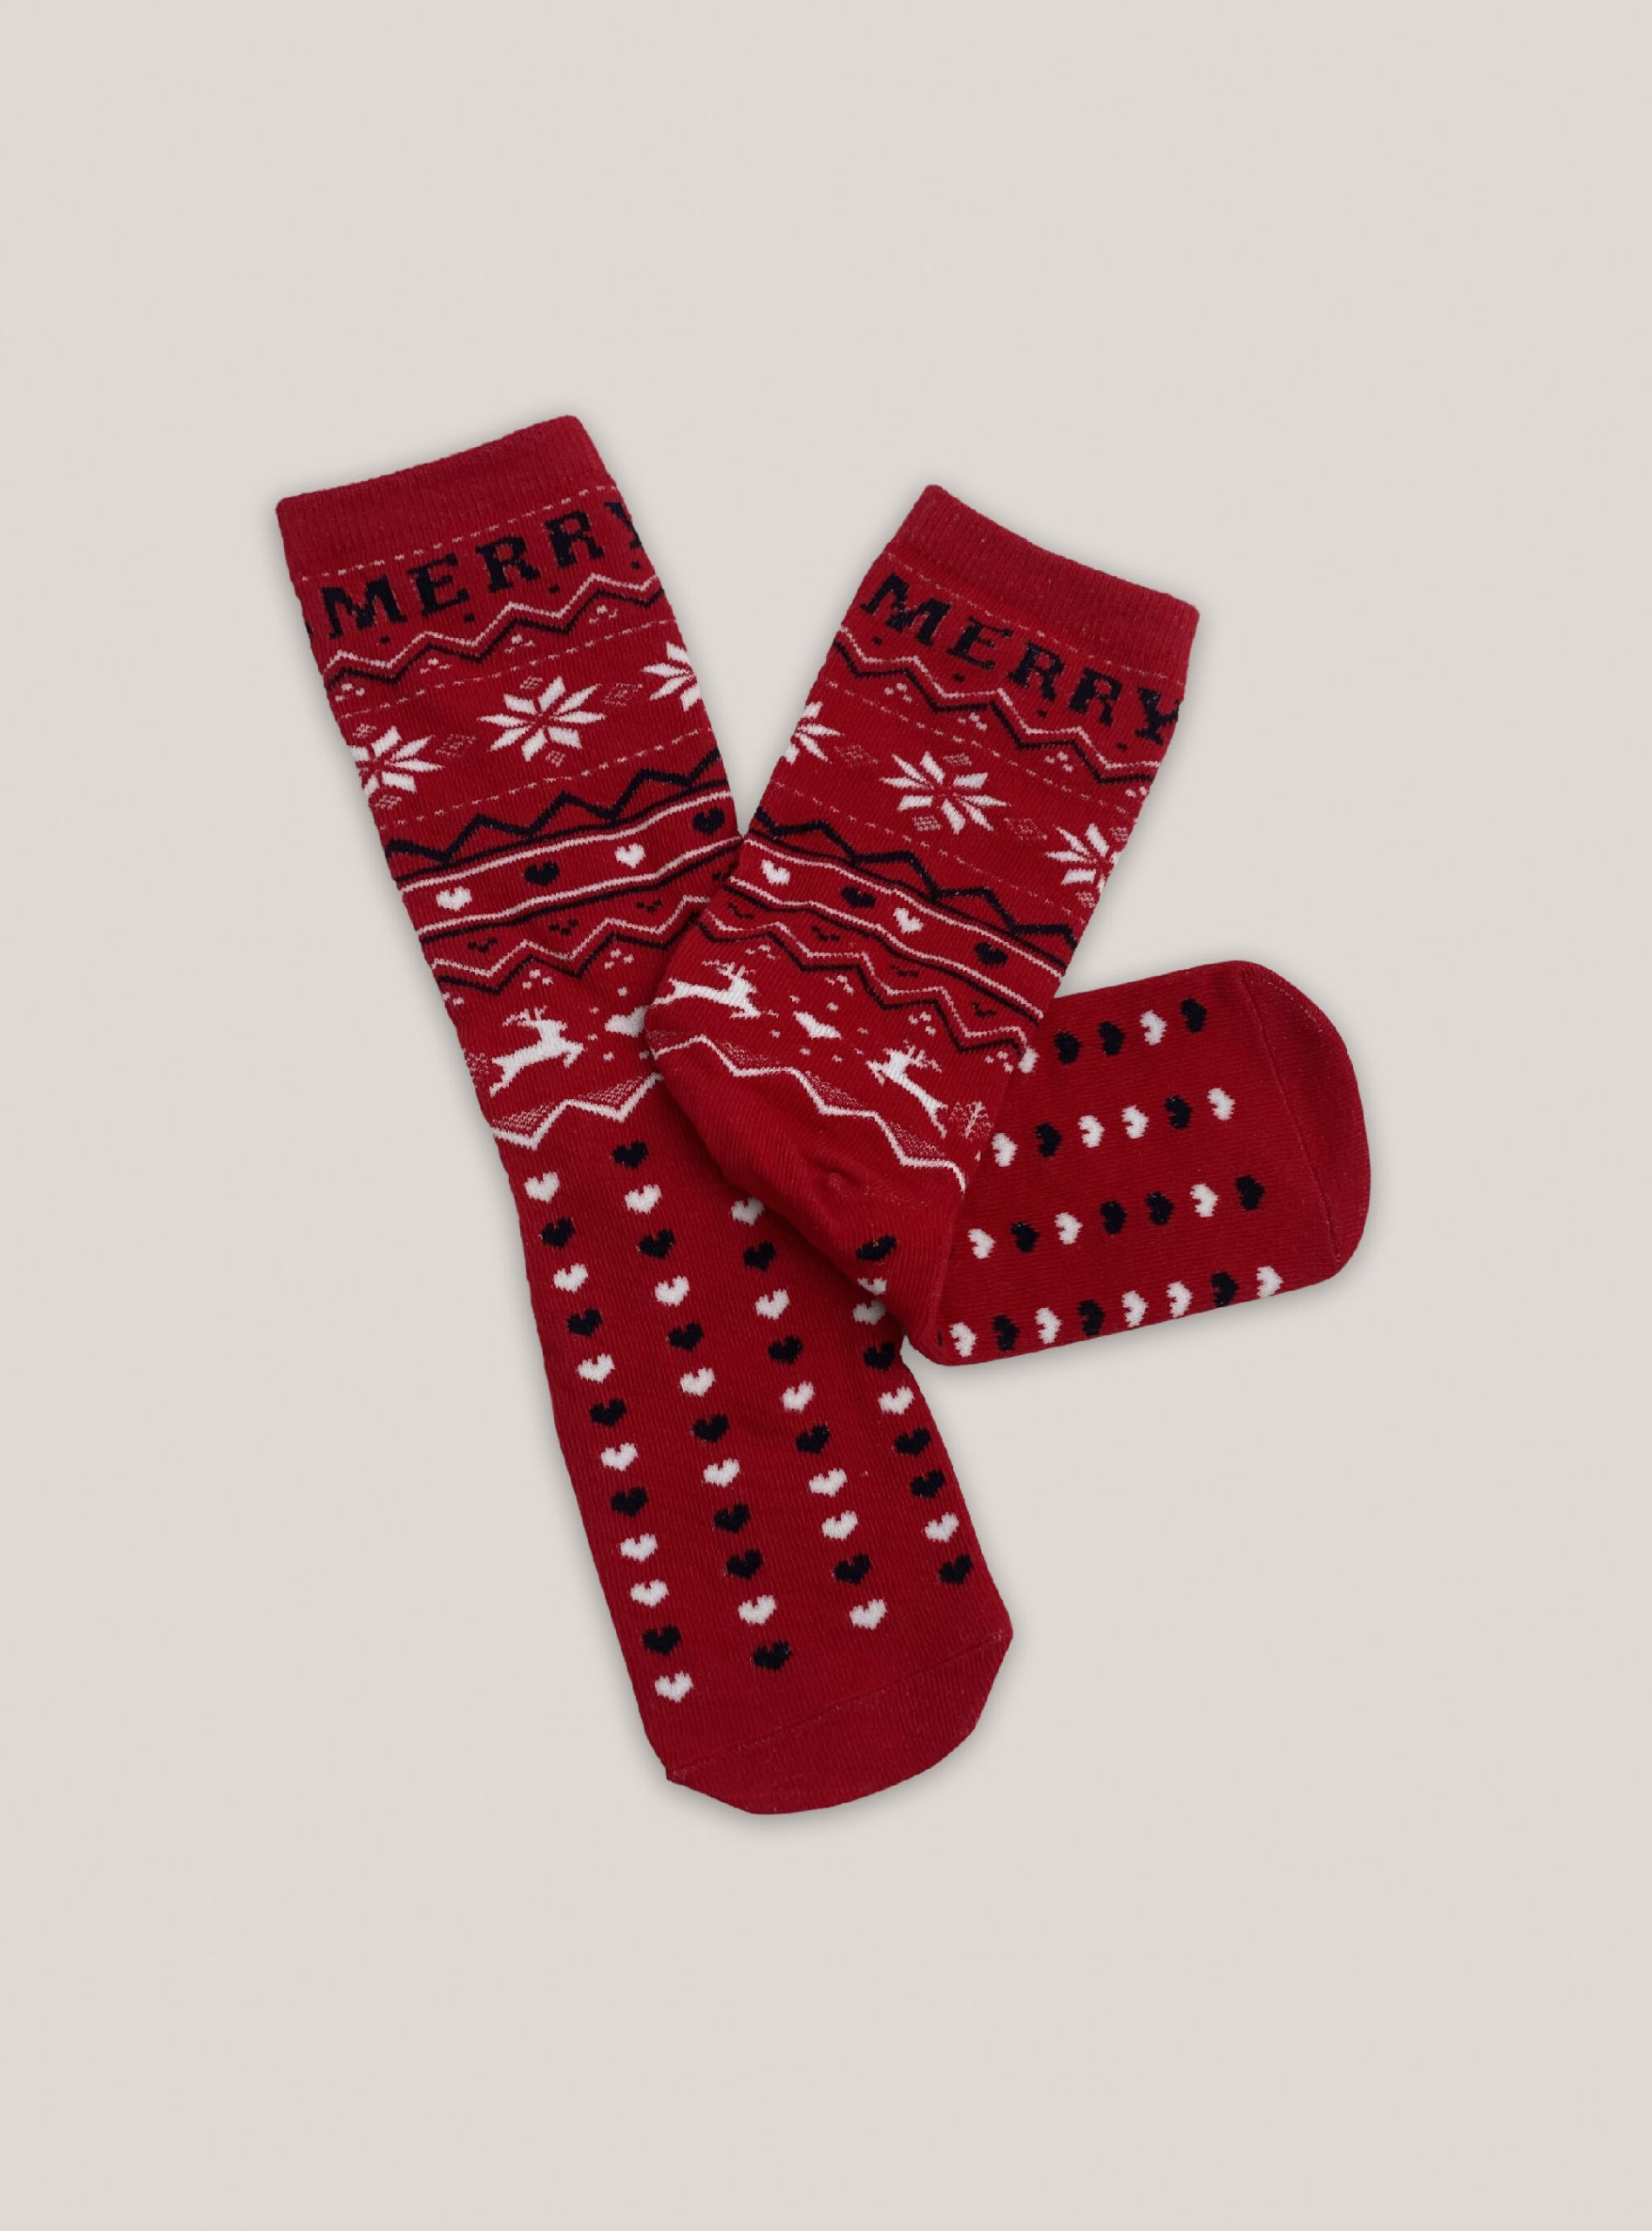 Xmas Frohe Weihnachten Socken Werbung Alcott Socken Frauen – 2